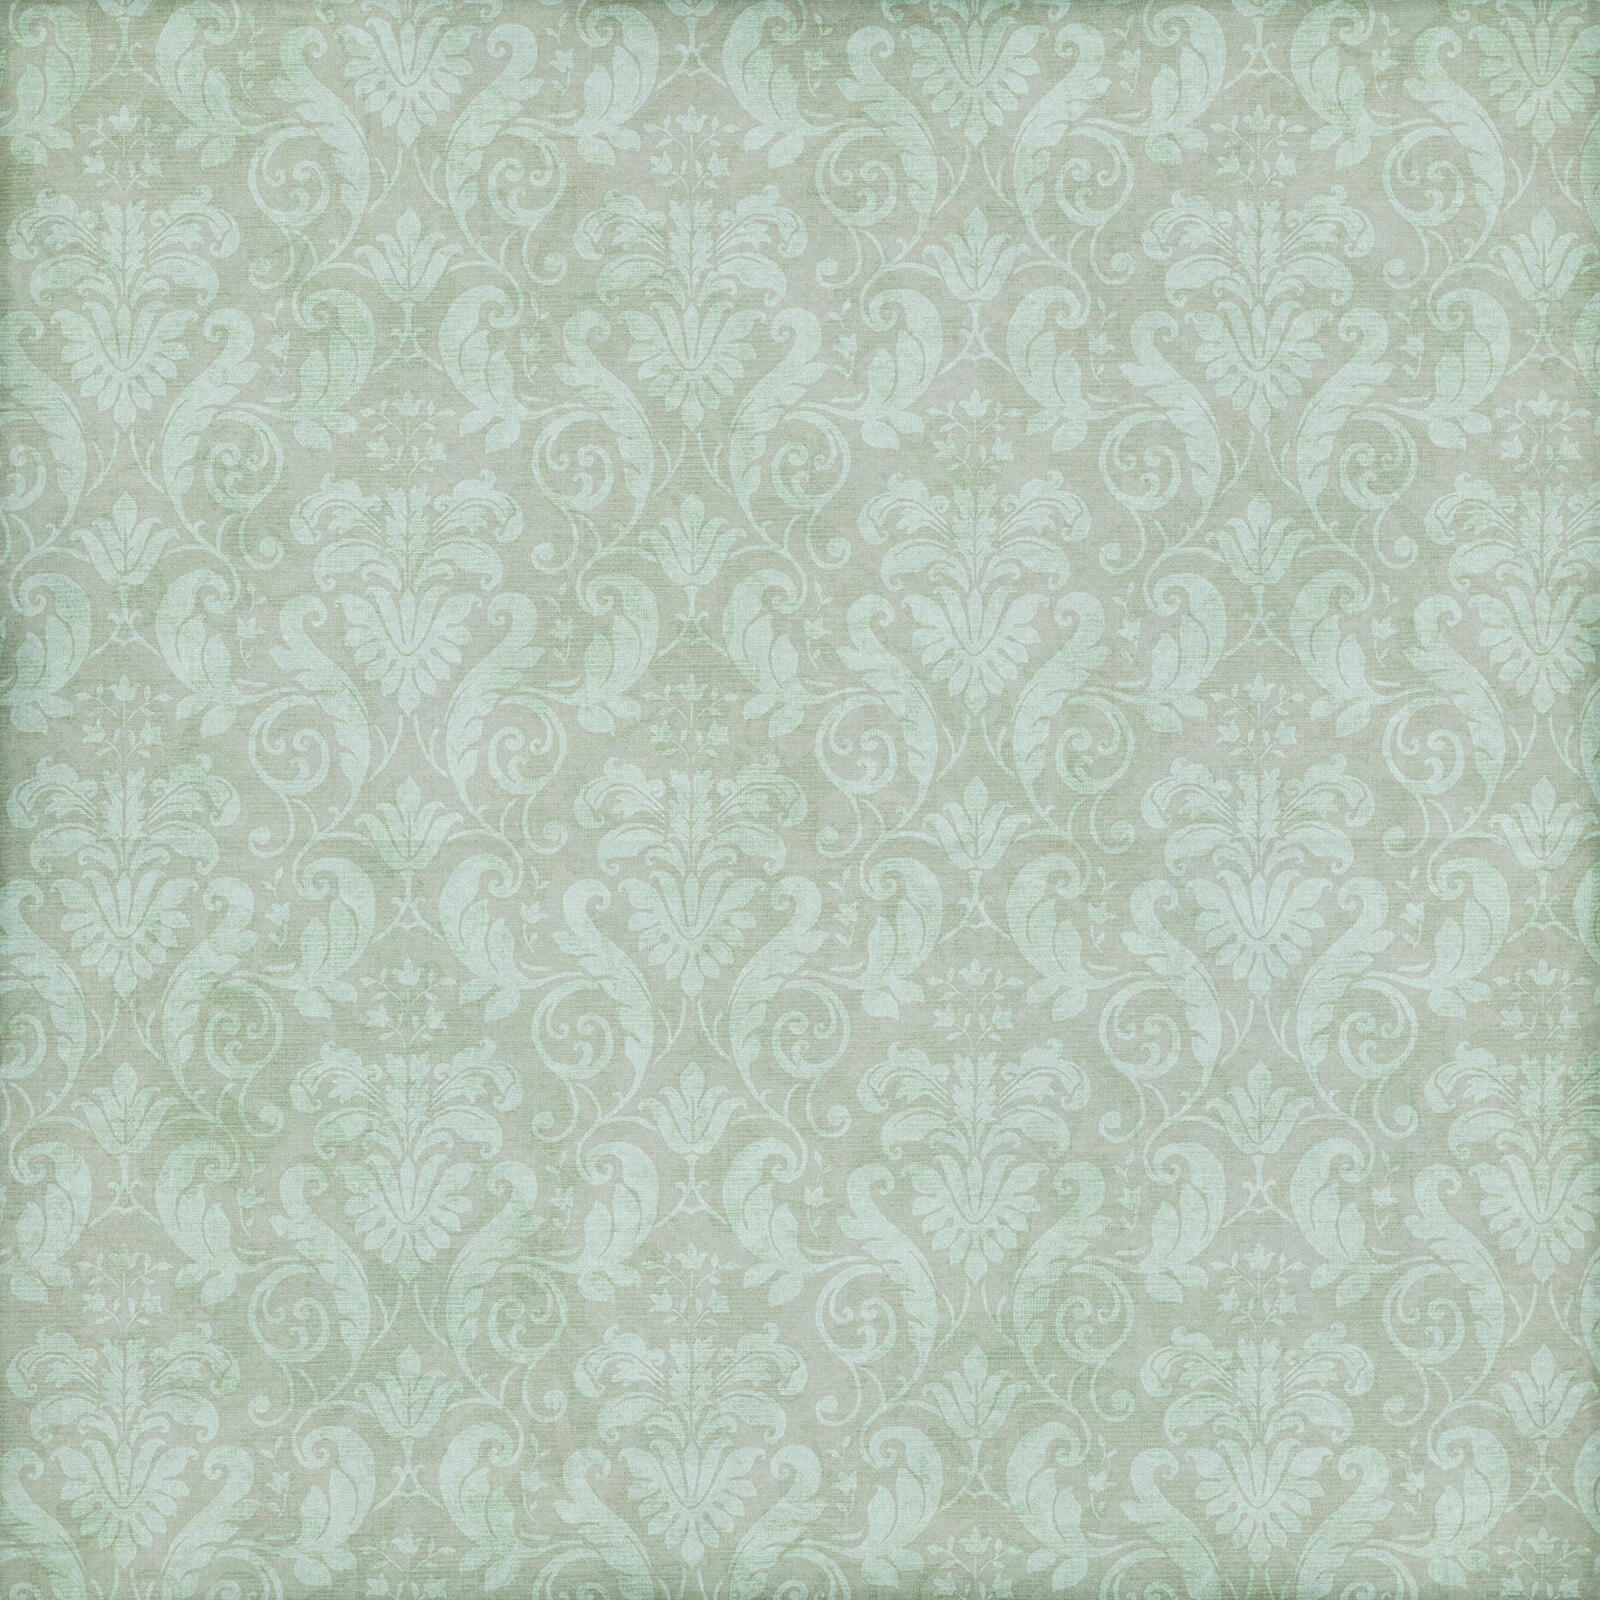 Wallpapers vintage pattern paper on the desktop